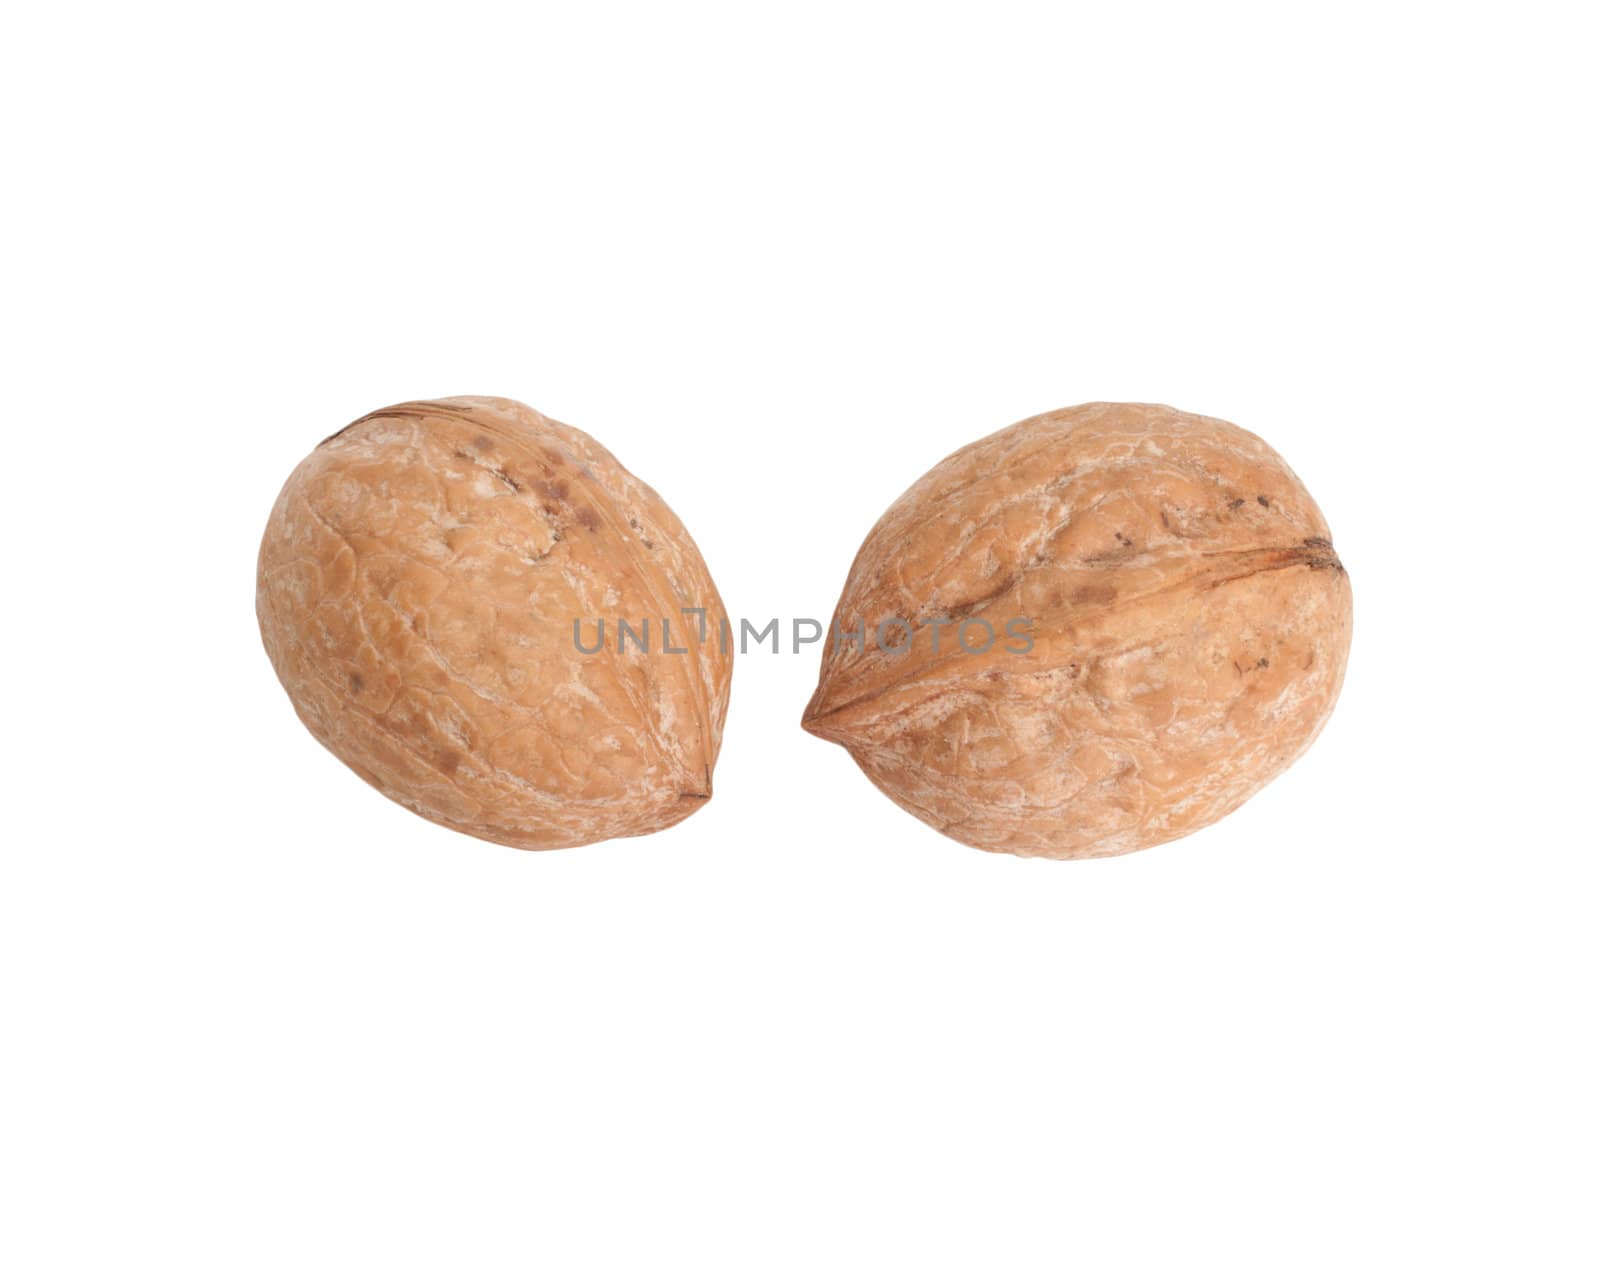 two walnuts on white background by schankz